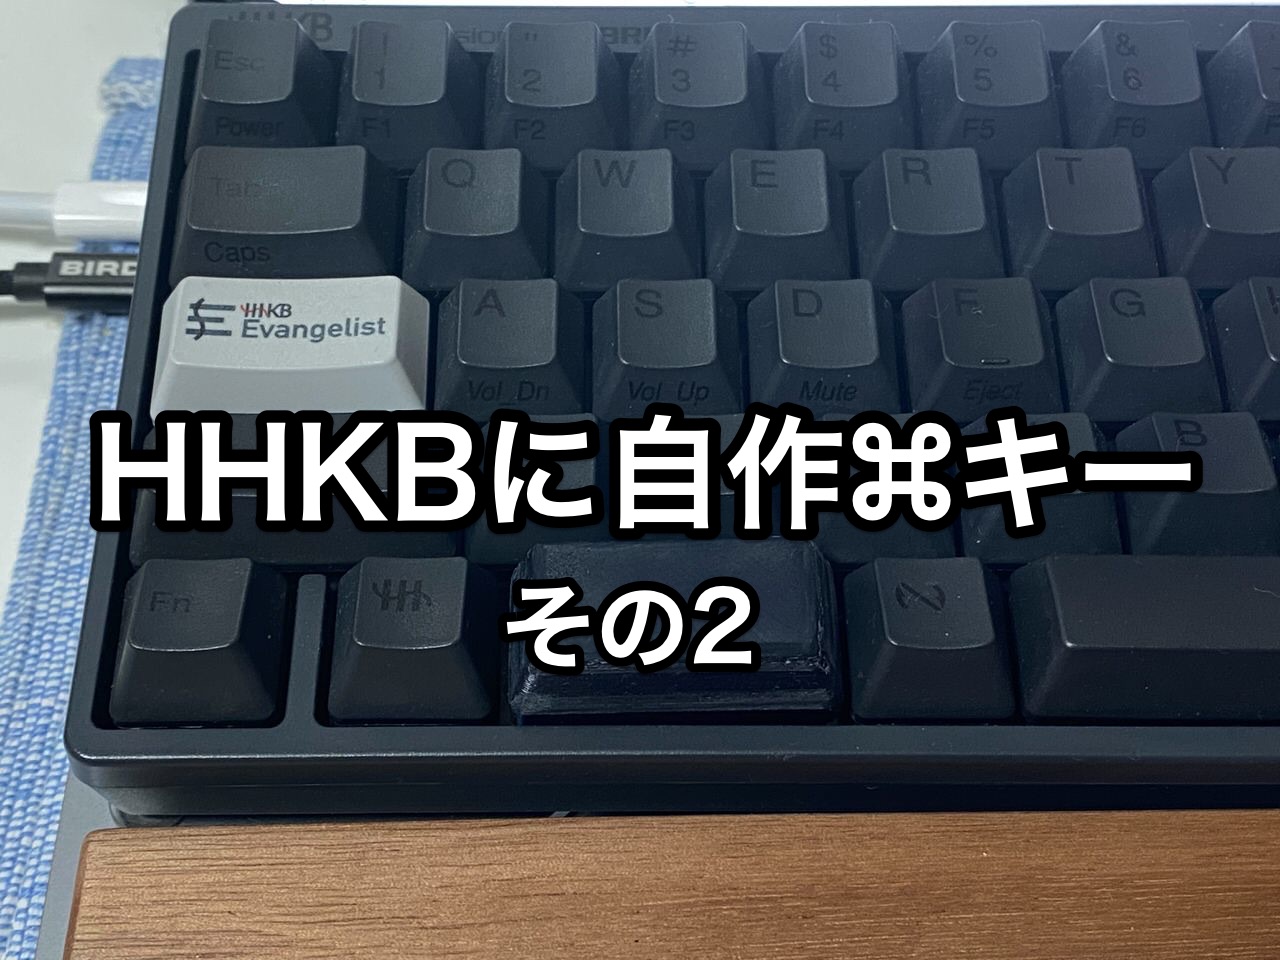 【HHKB】キートップを3Dプリンターで自作する【その2】 13 title